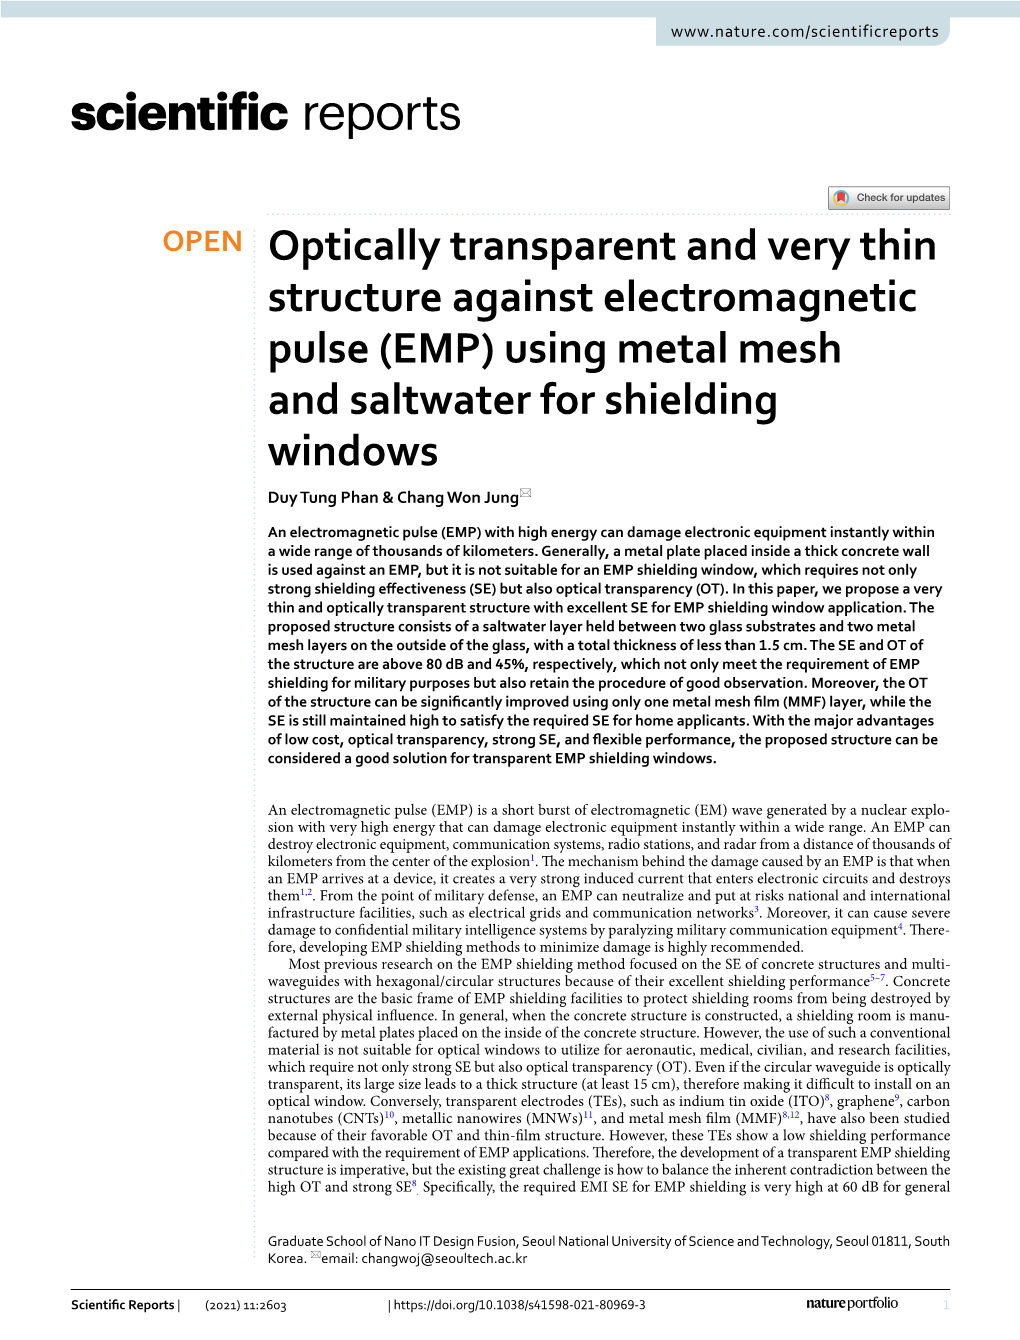 (EMP) Using Metal Mesh and Saltwater for Shielding Windows Duy Tung Phan & Chang Won Jung*